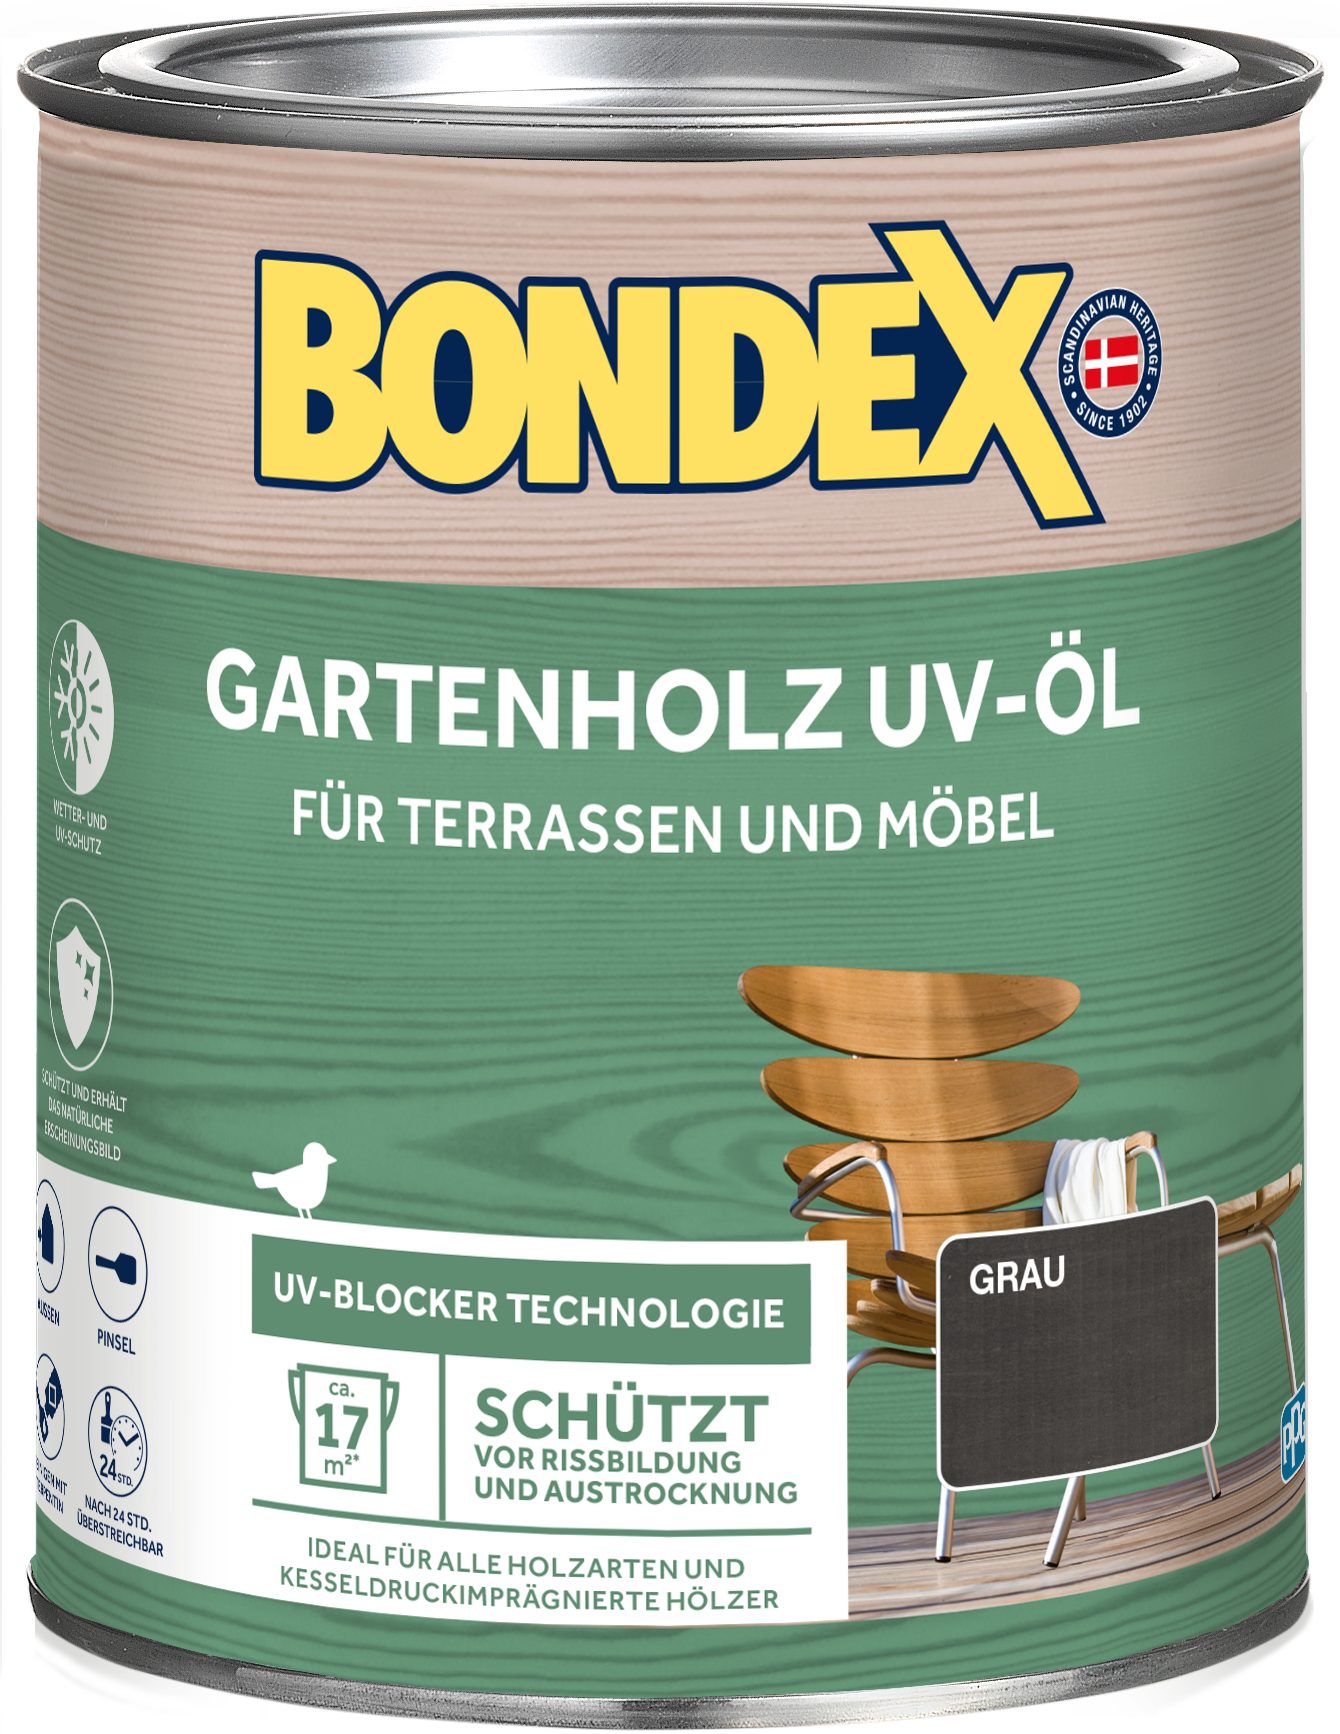 Bondex Holzöl UV-Öl farblos oder grau, 0,75 - 2,5 l, Wasser-stop Abperleffekt